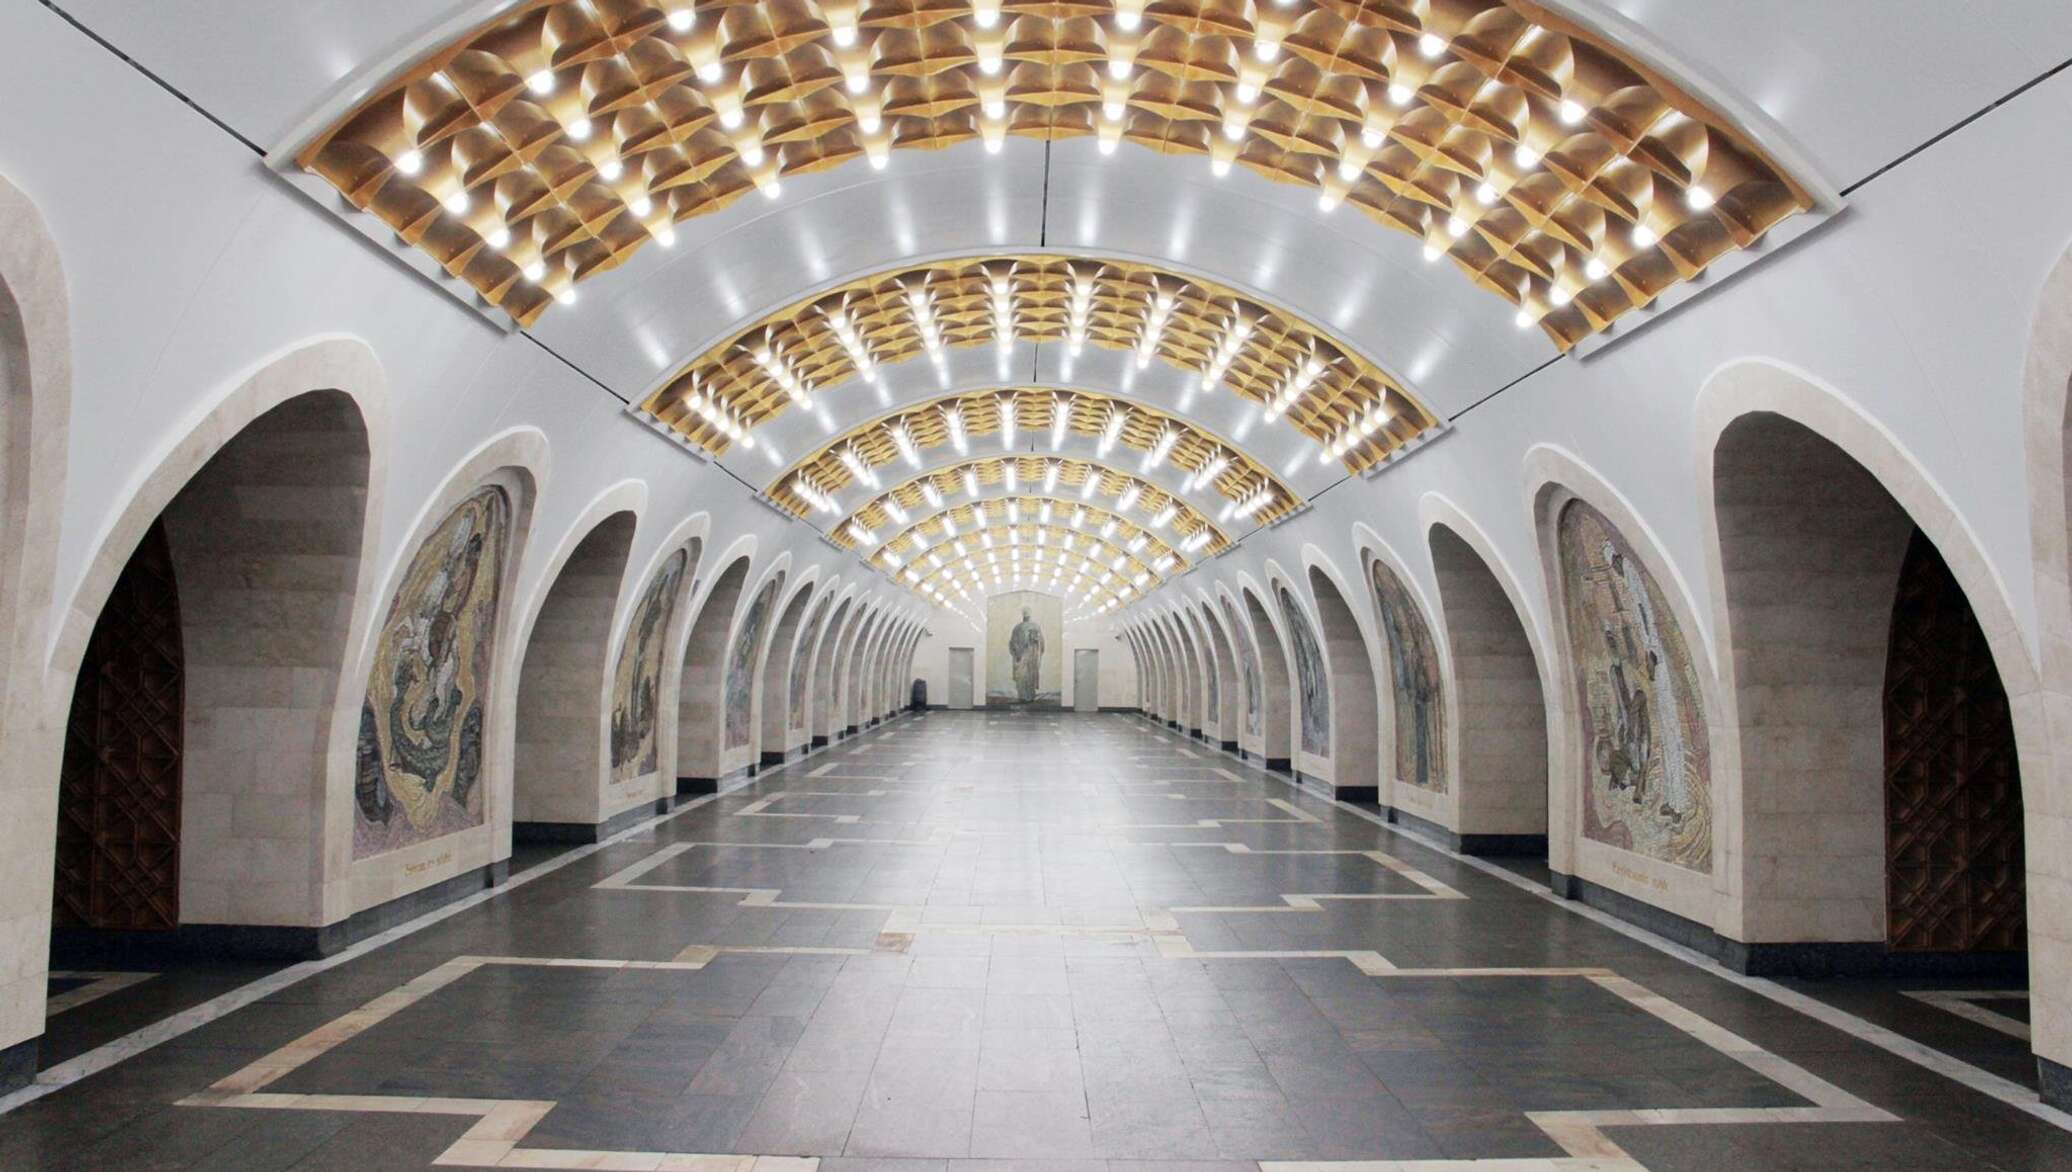 Станции метро баку